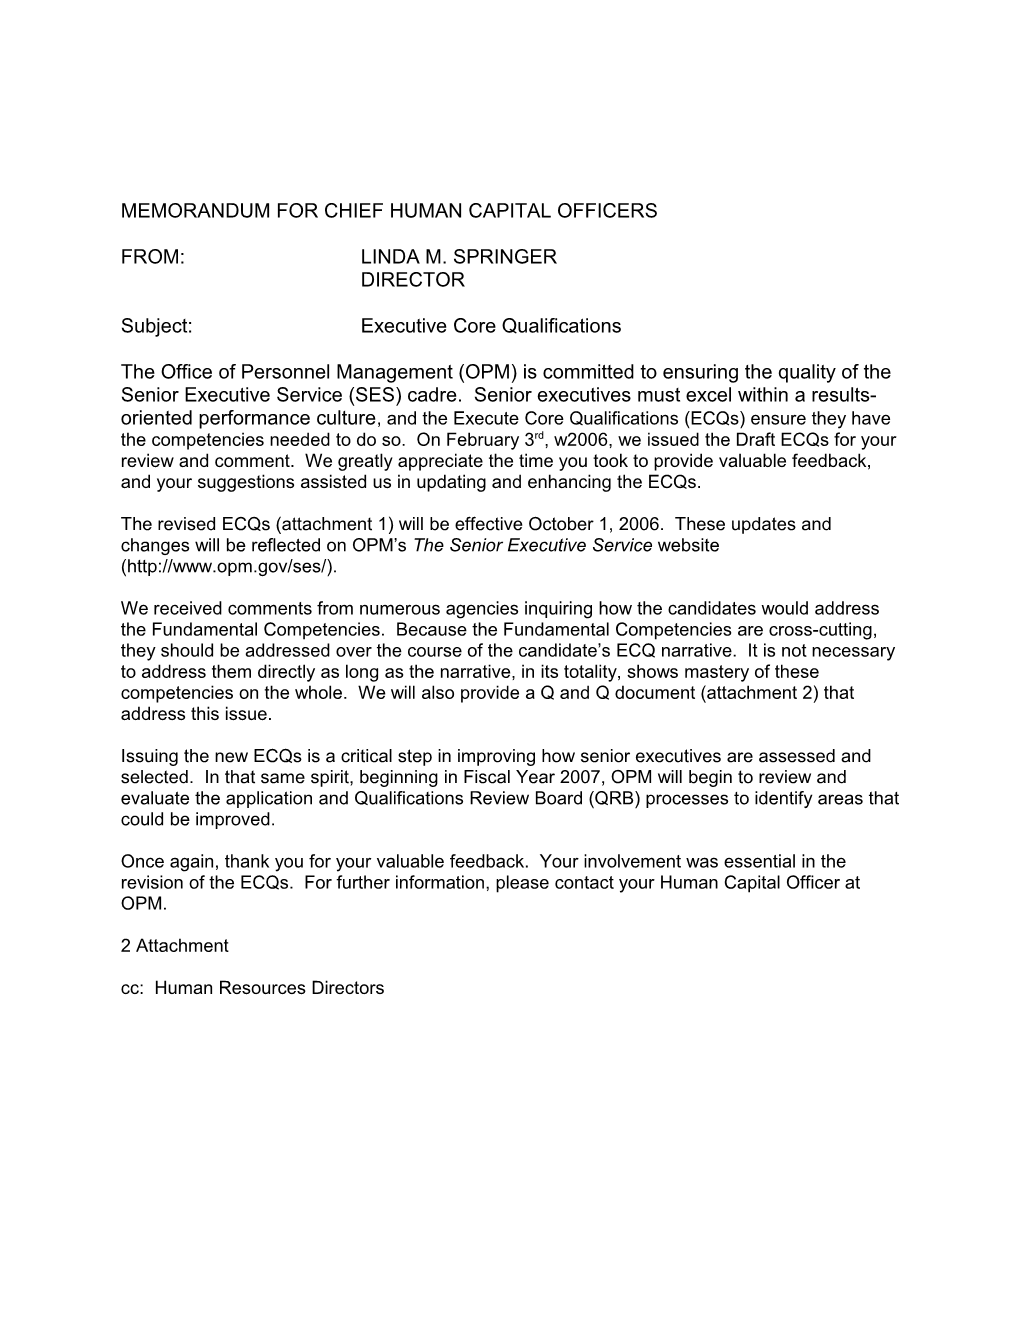 Memorandum for Chief Human Capital Officers